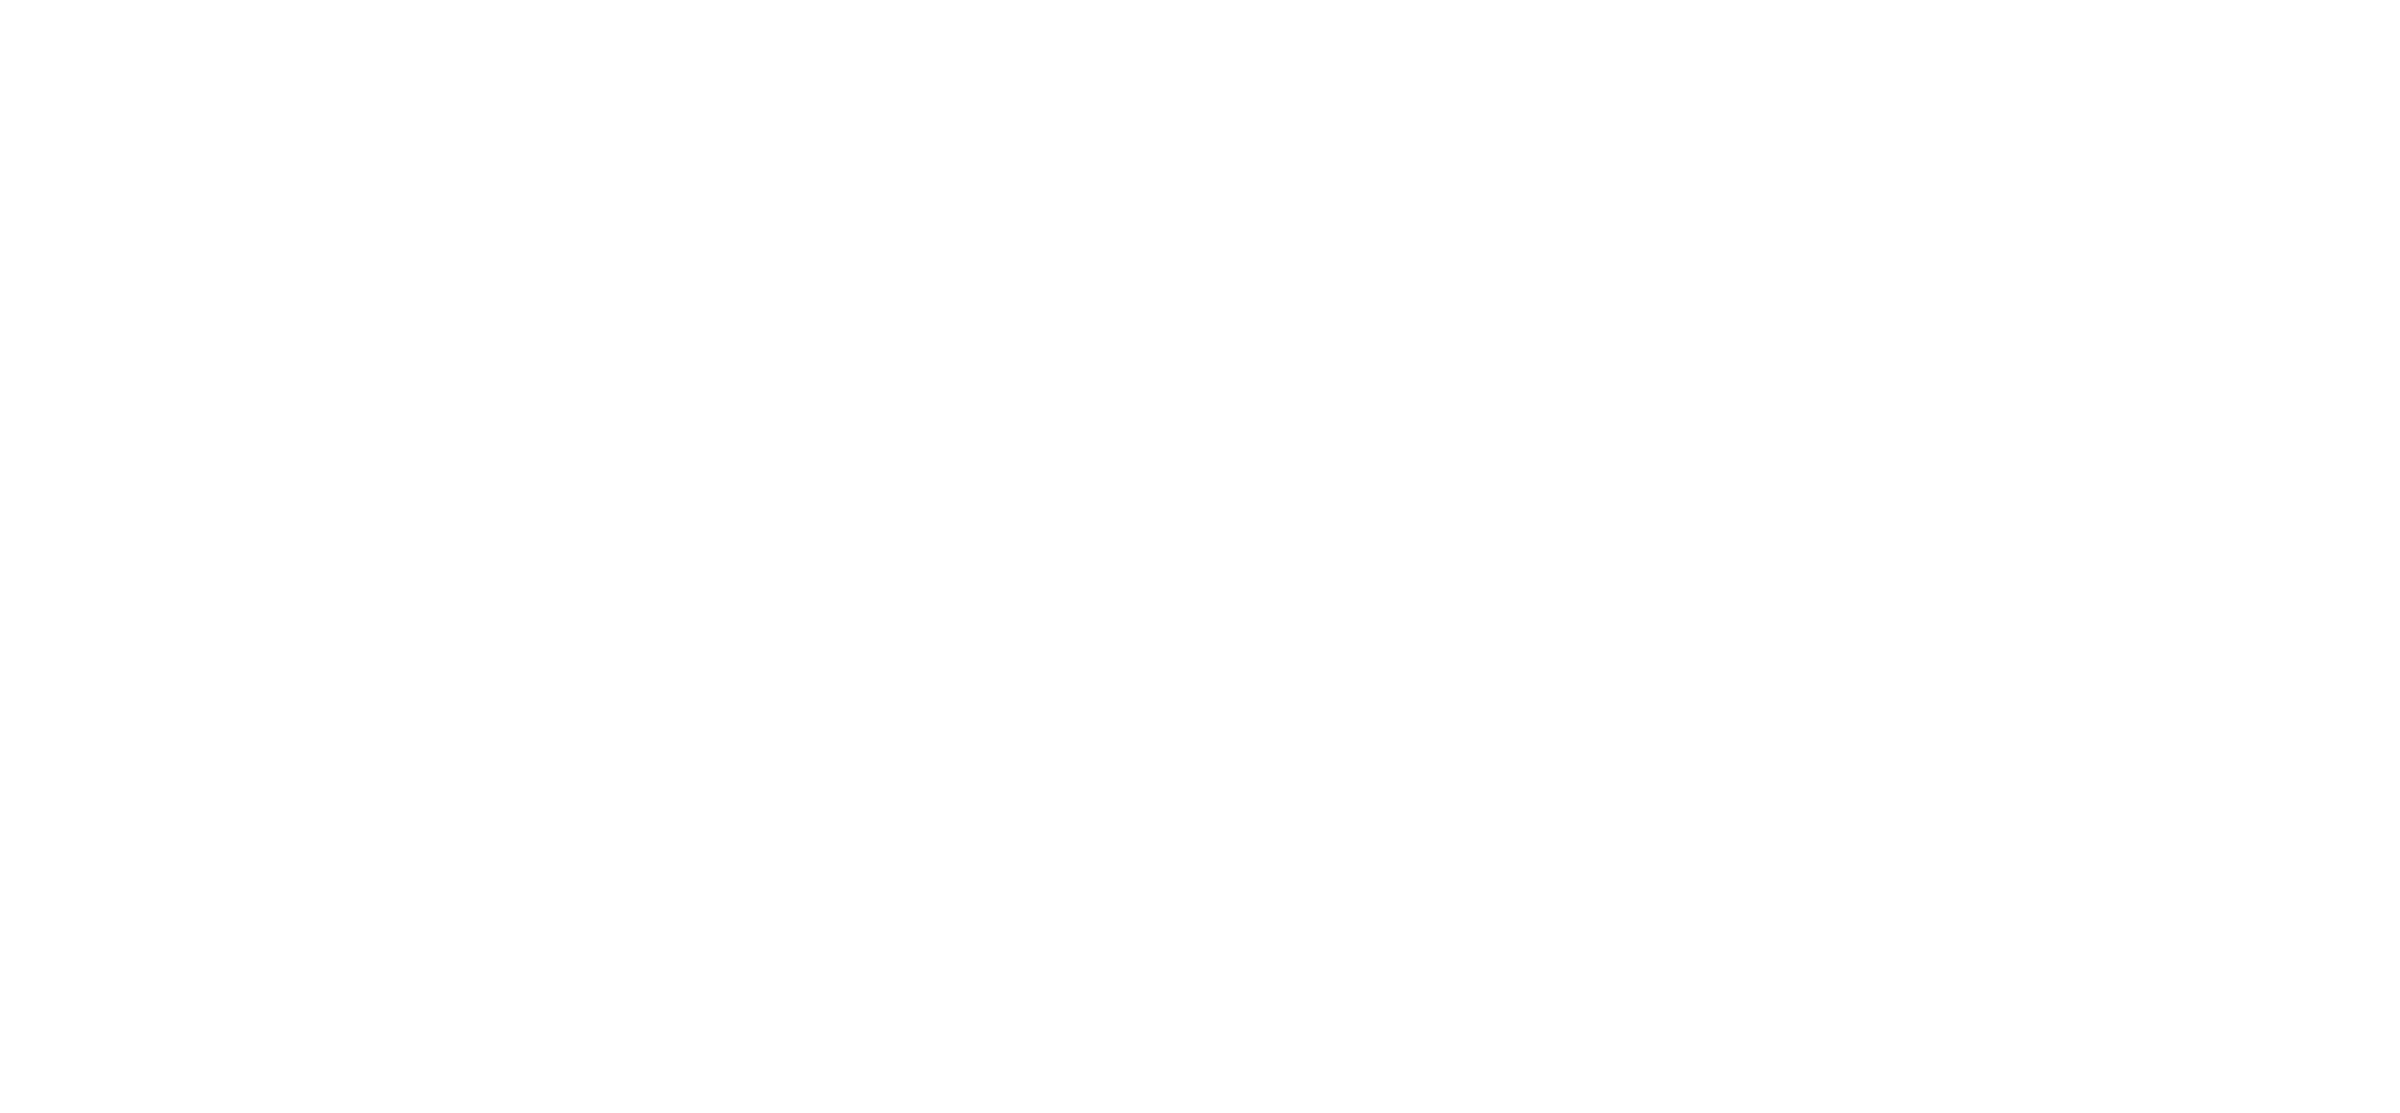 scubaculture_logo1_white (2)